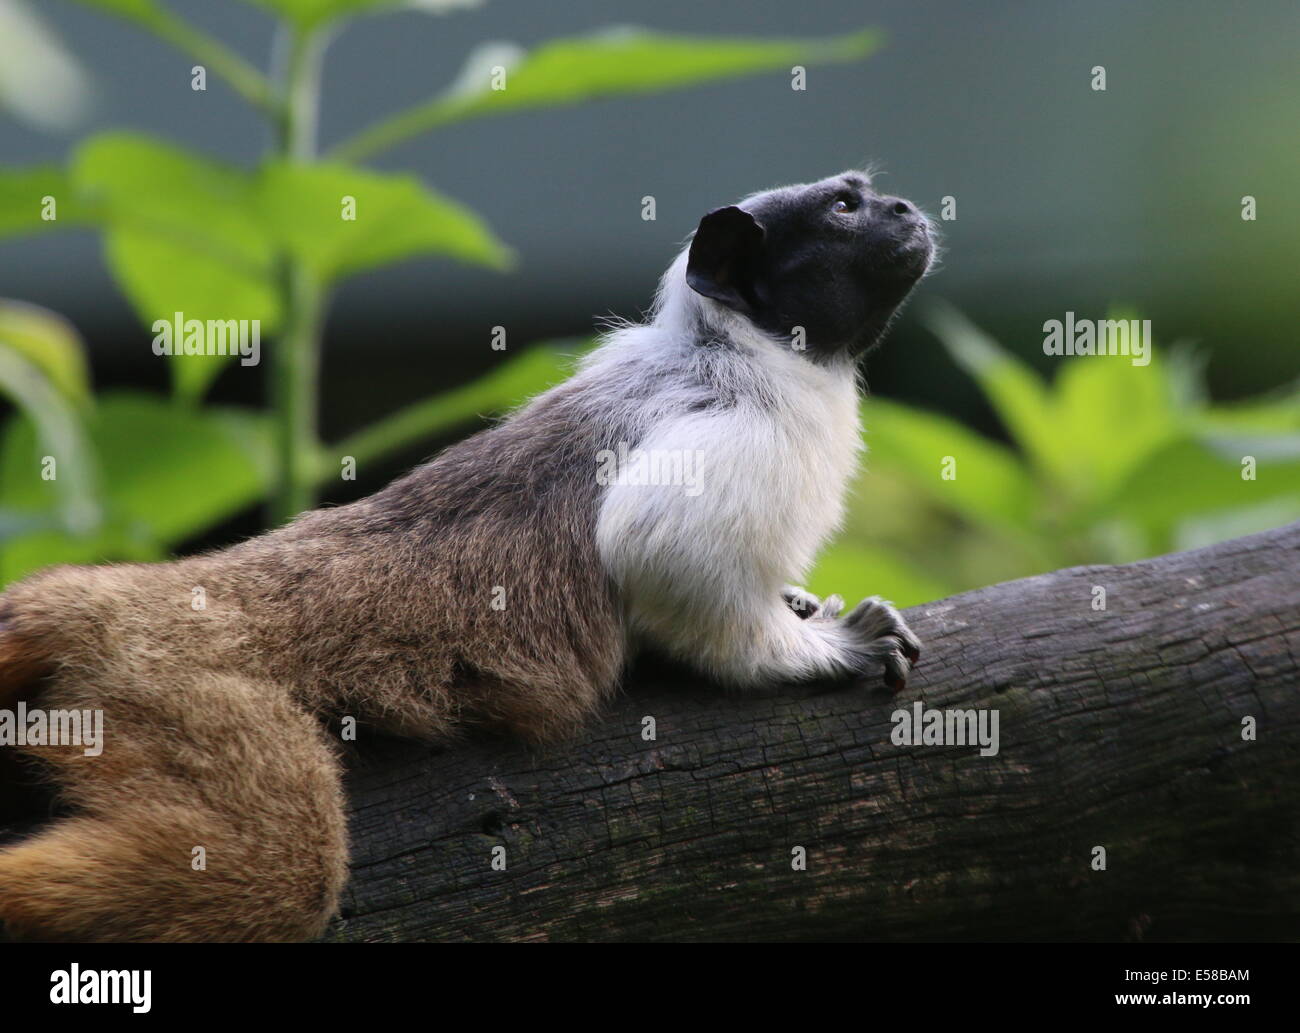 Pied tamarin monkey (Saguinus bicolor),  endangered primate species from  the Brazilian Amazon Rainforest Stock Photo